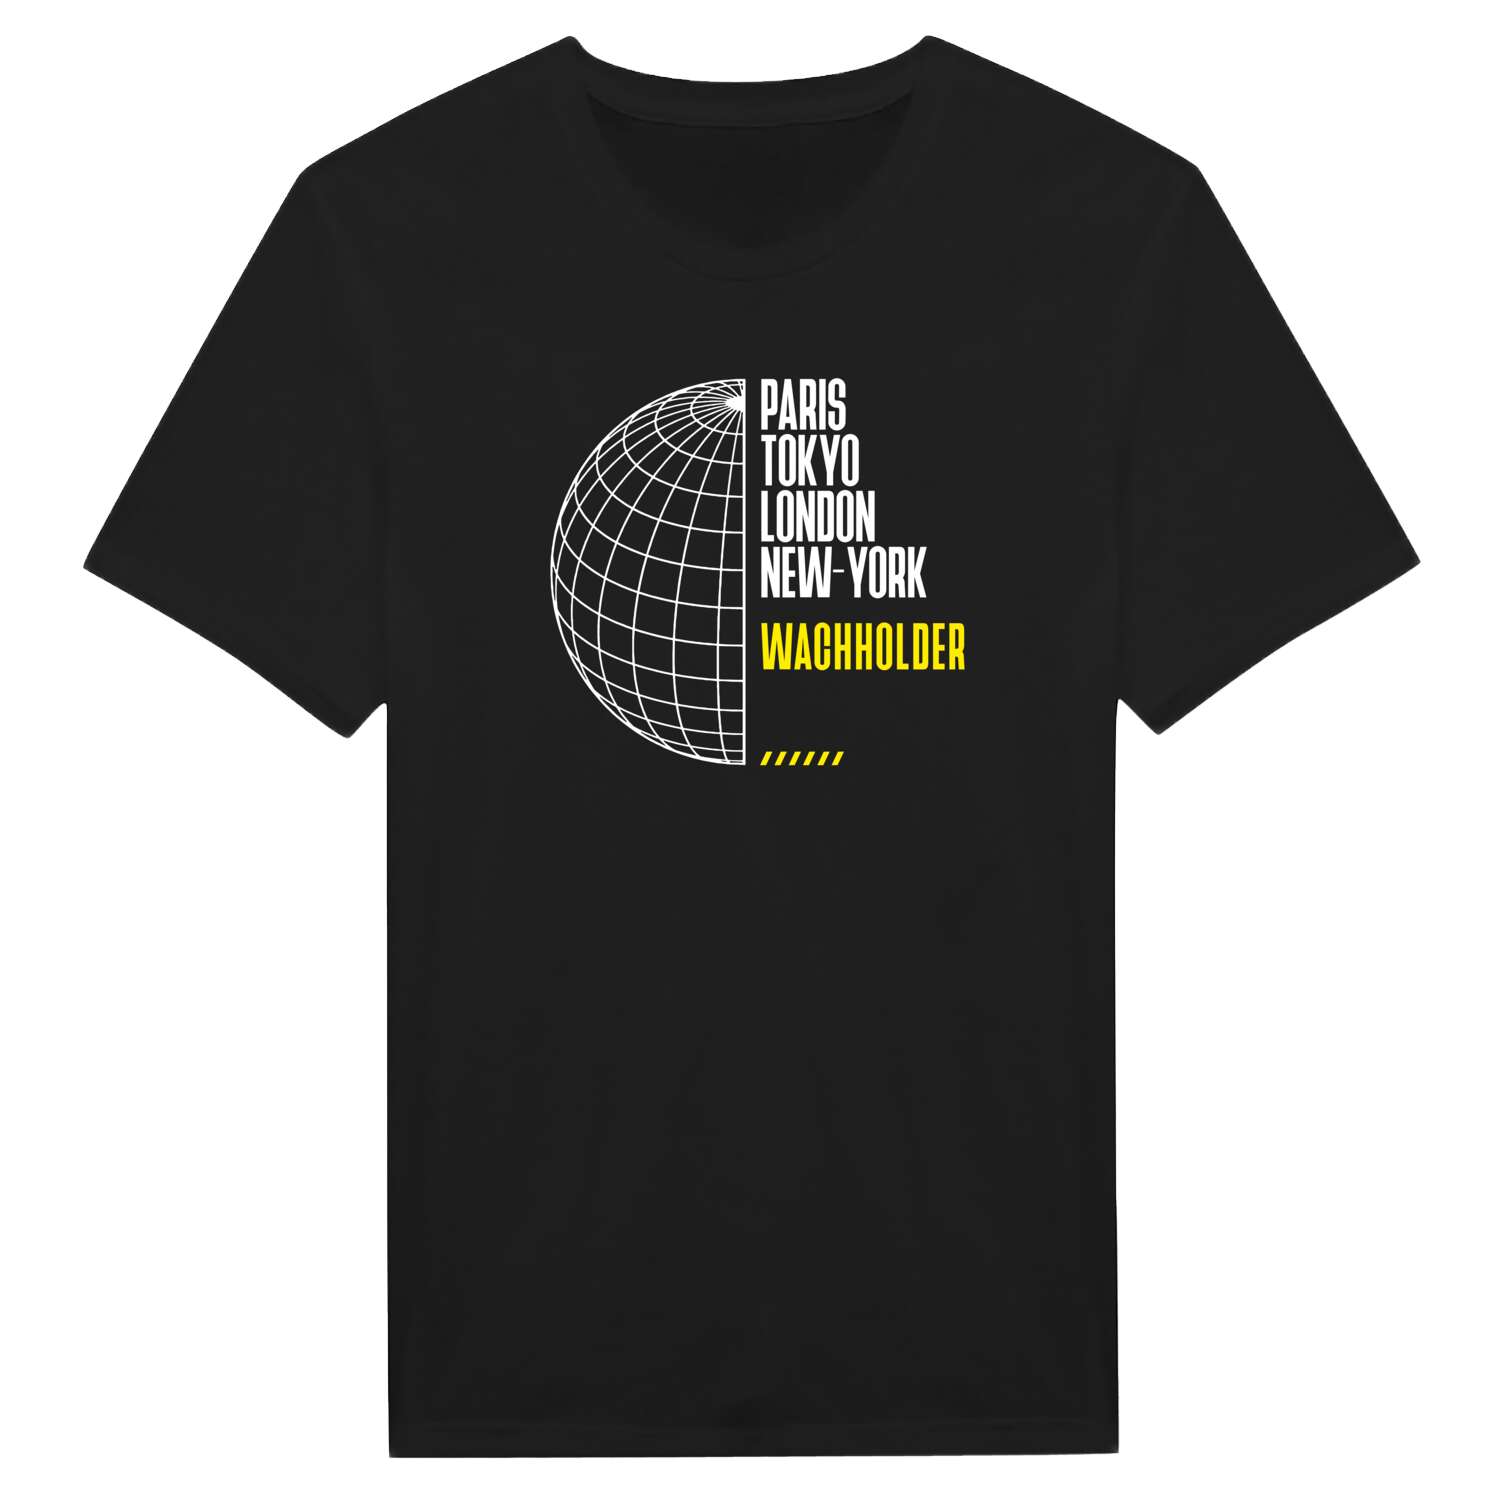 Wachholder T-Shirt »Paris Tokyo London«